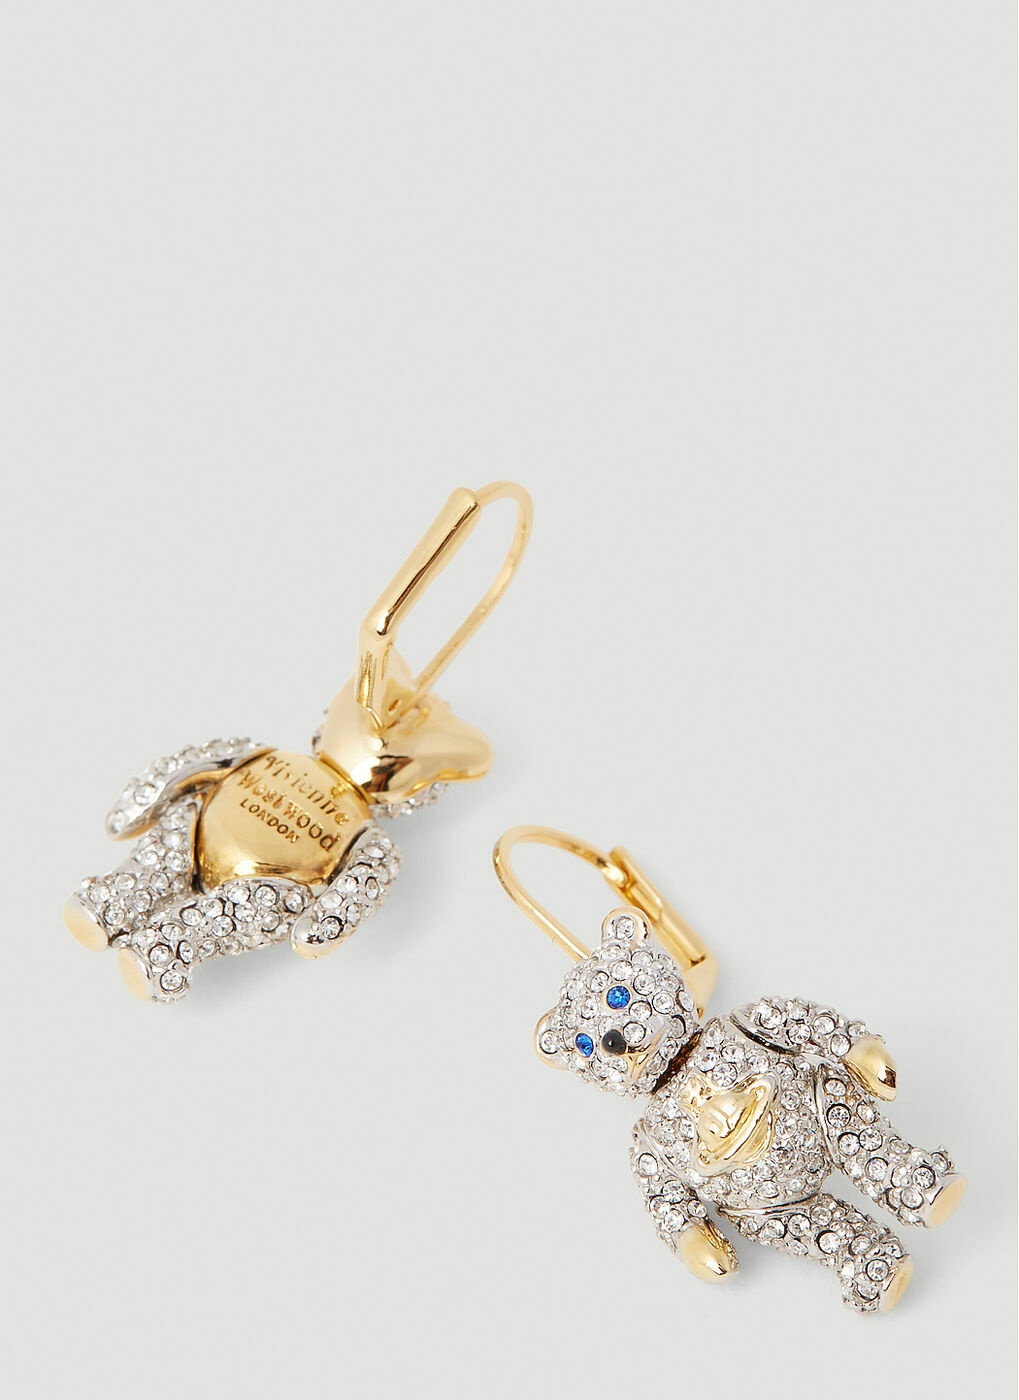 vivienne westwood nana bling teddy bear necklace pendant with box | eBay